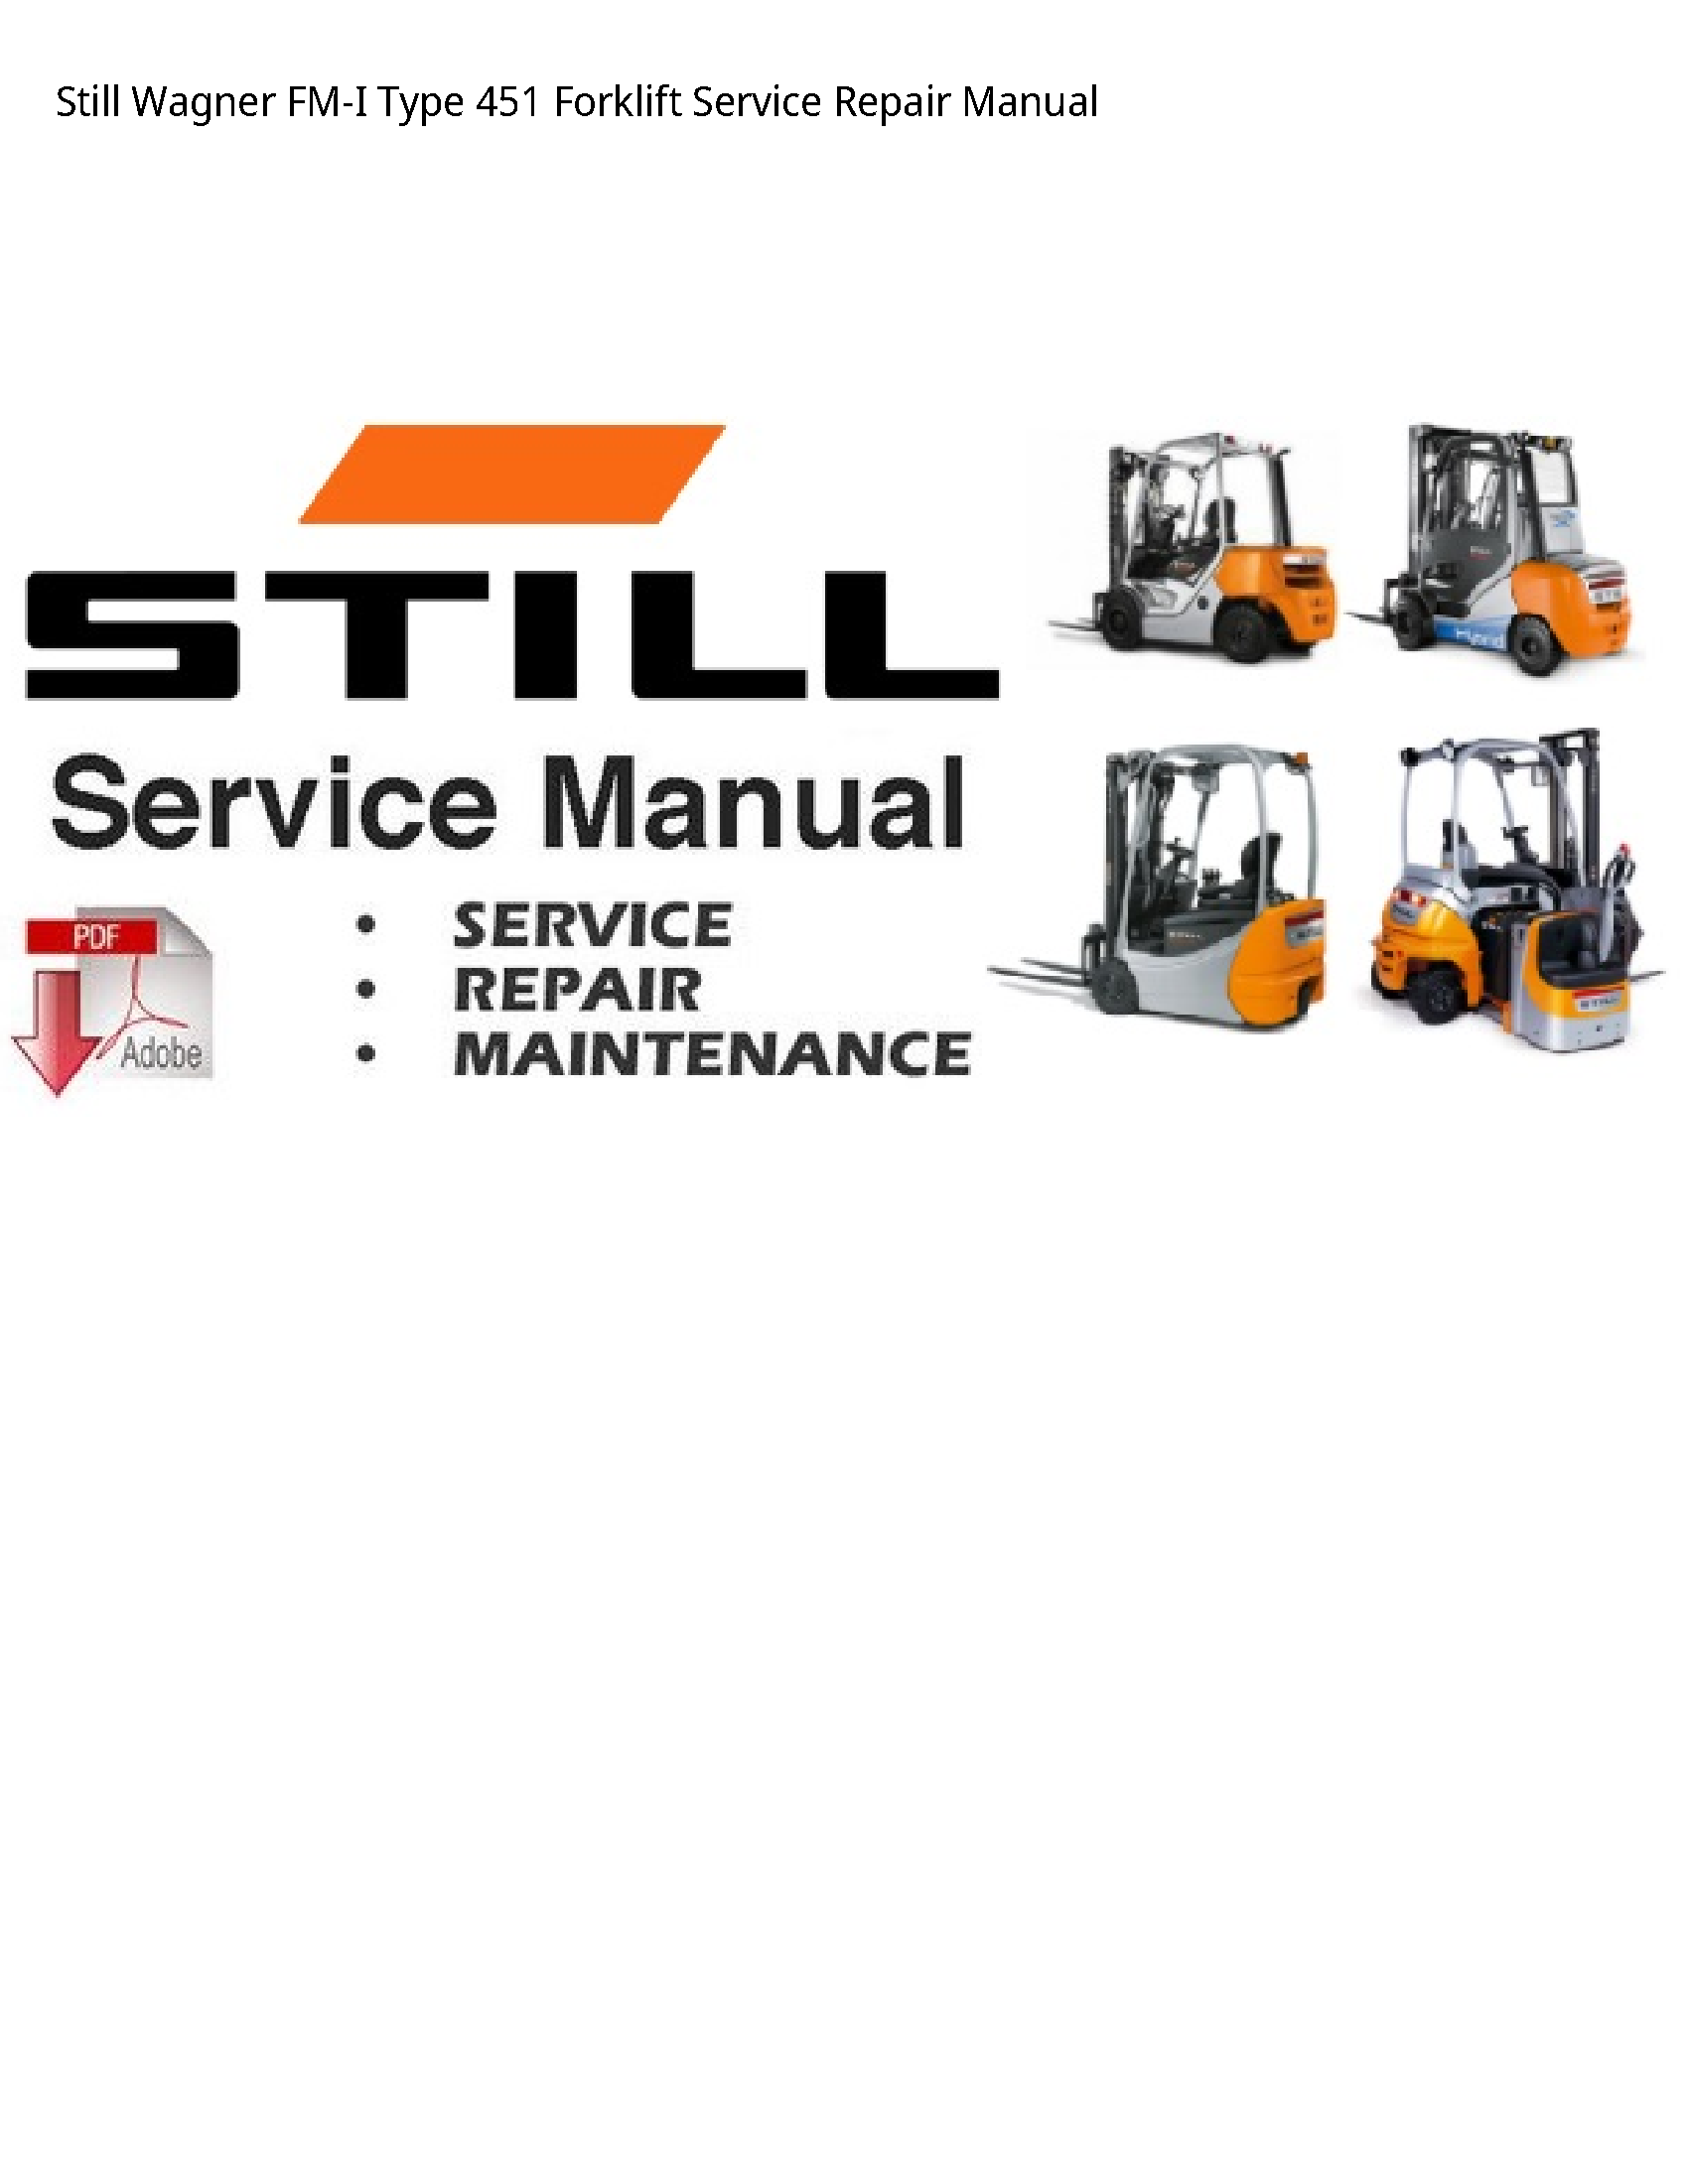 Still 451 Wagner FM-I Type Forklift manual